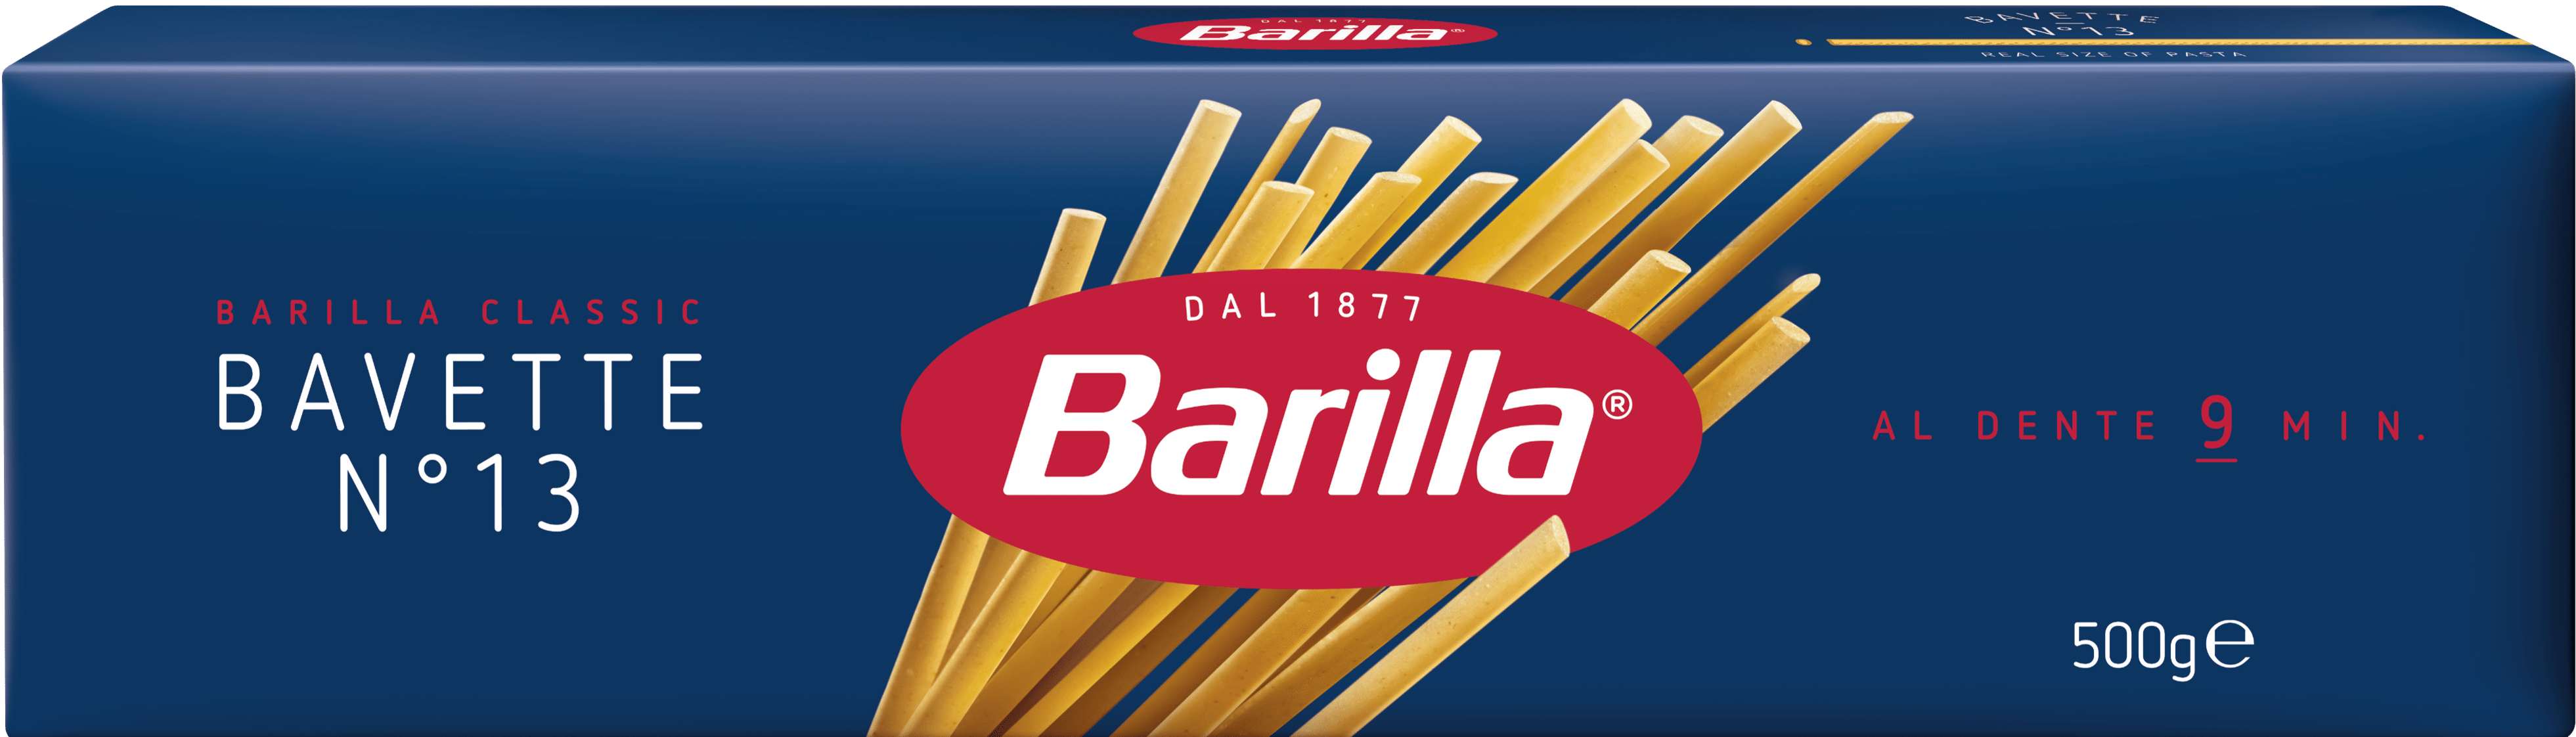 Barilla Bavette pasta